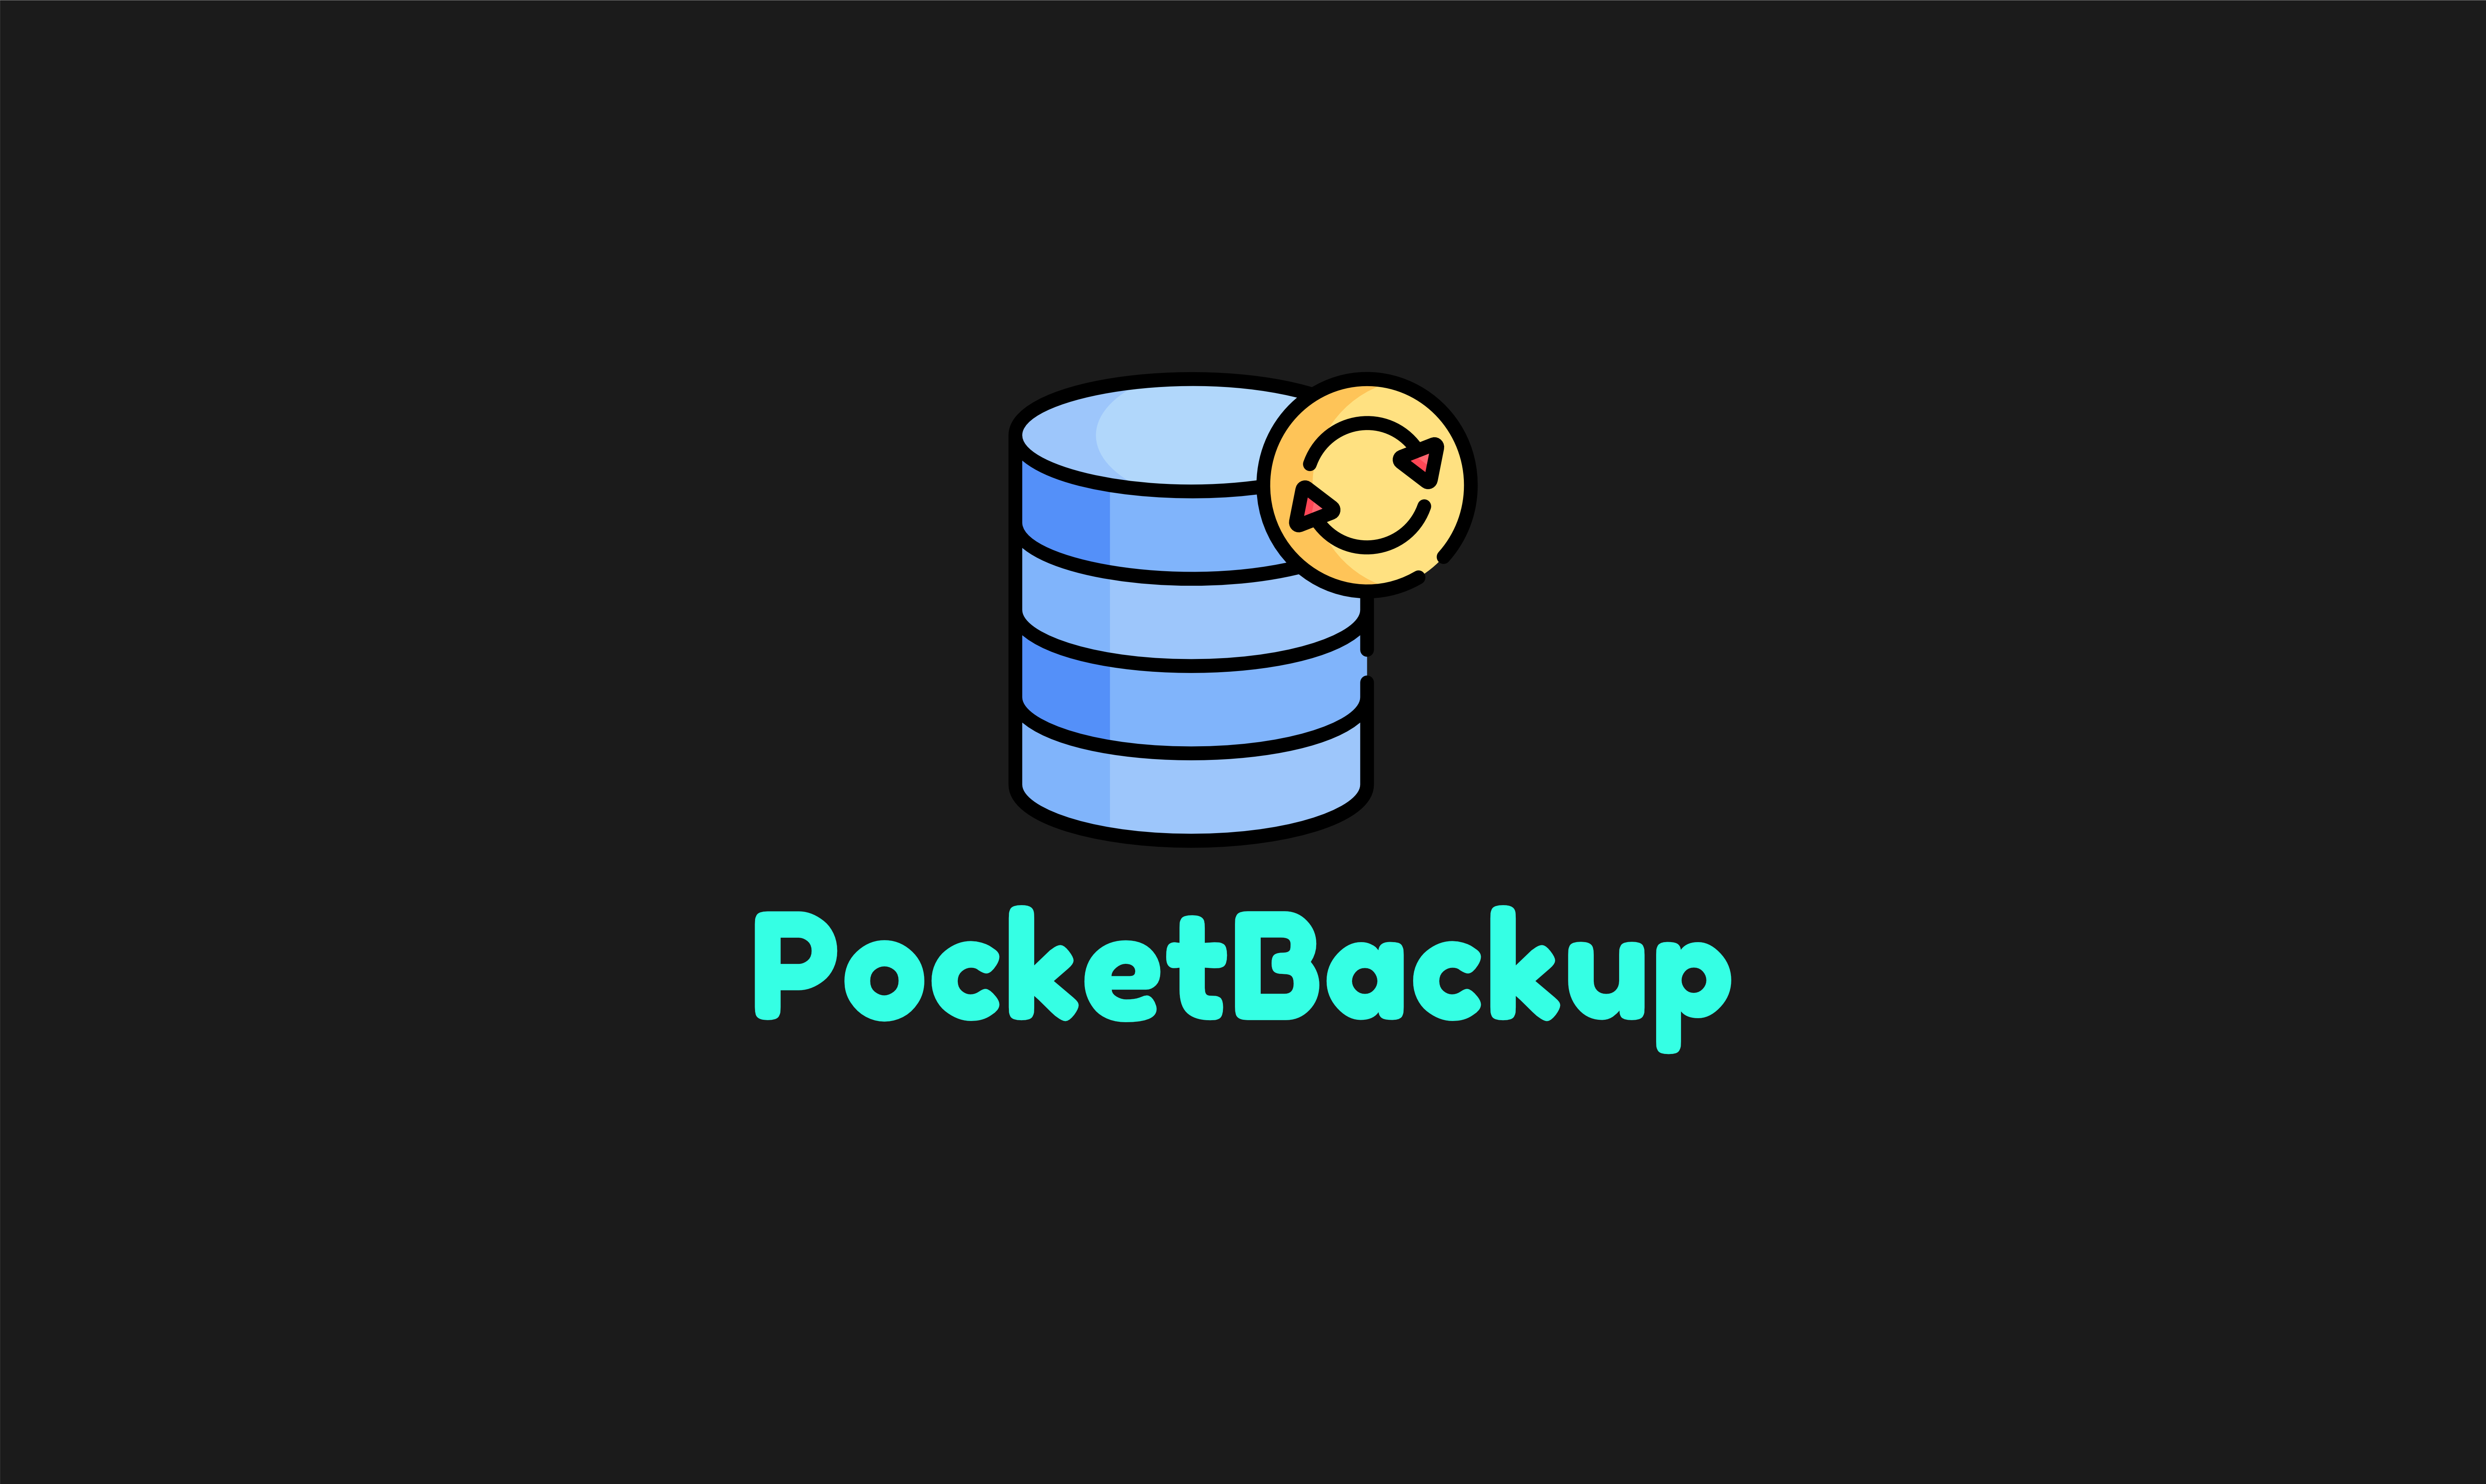 PocketBackup